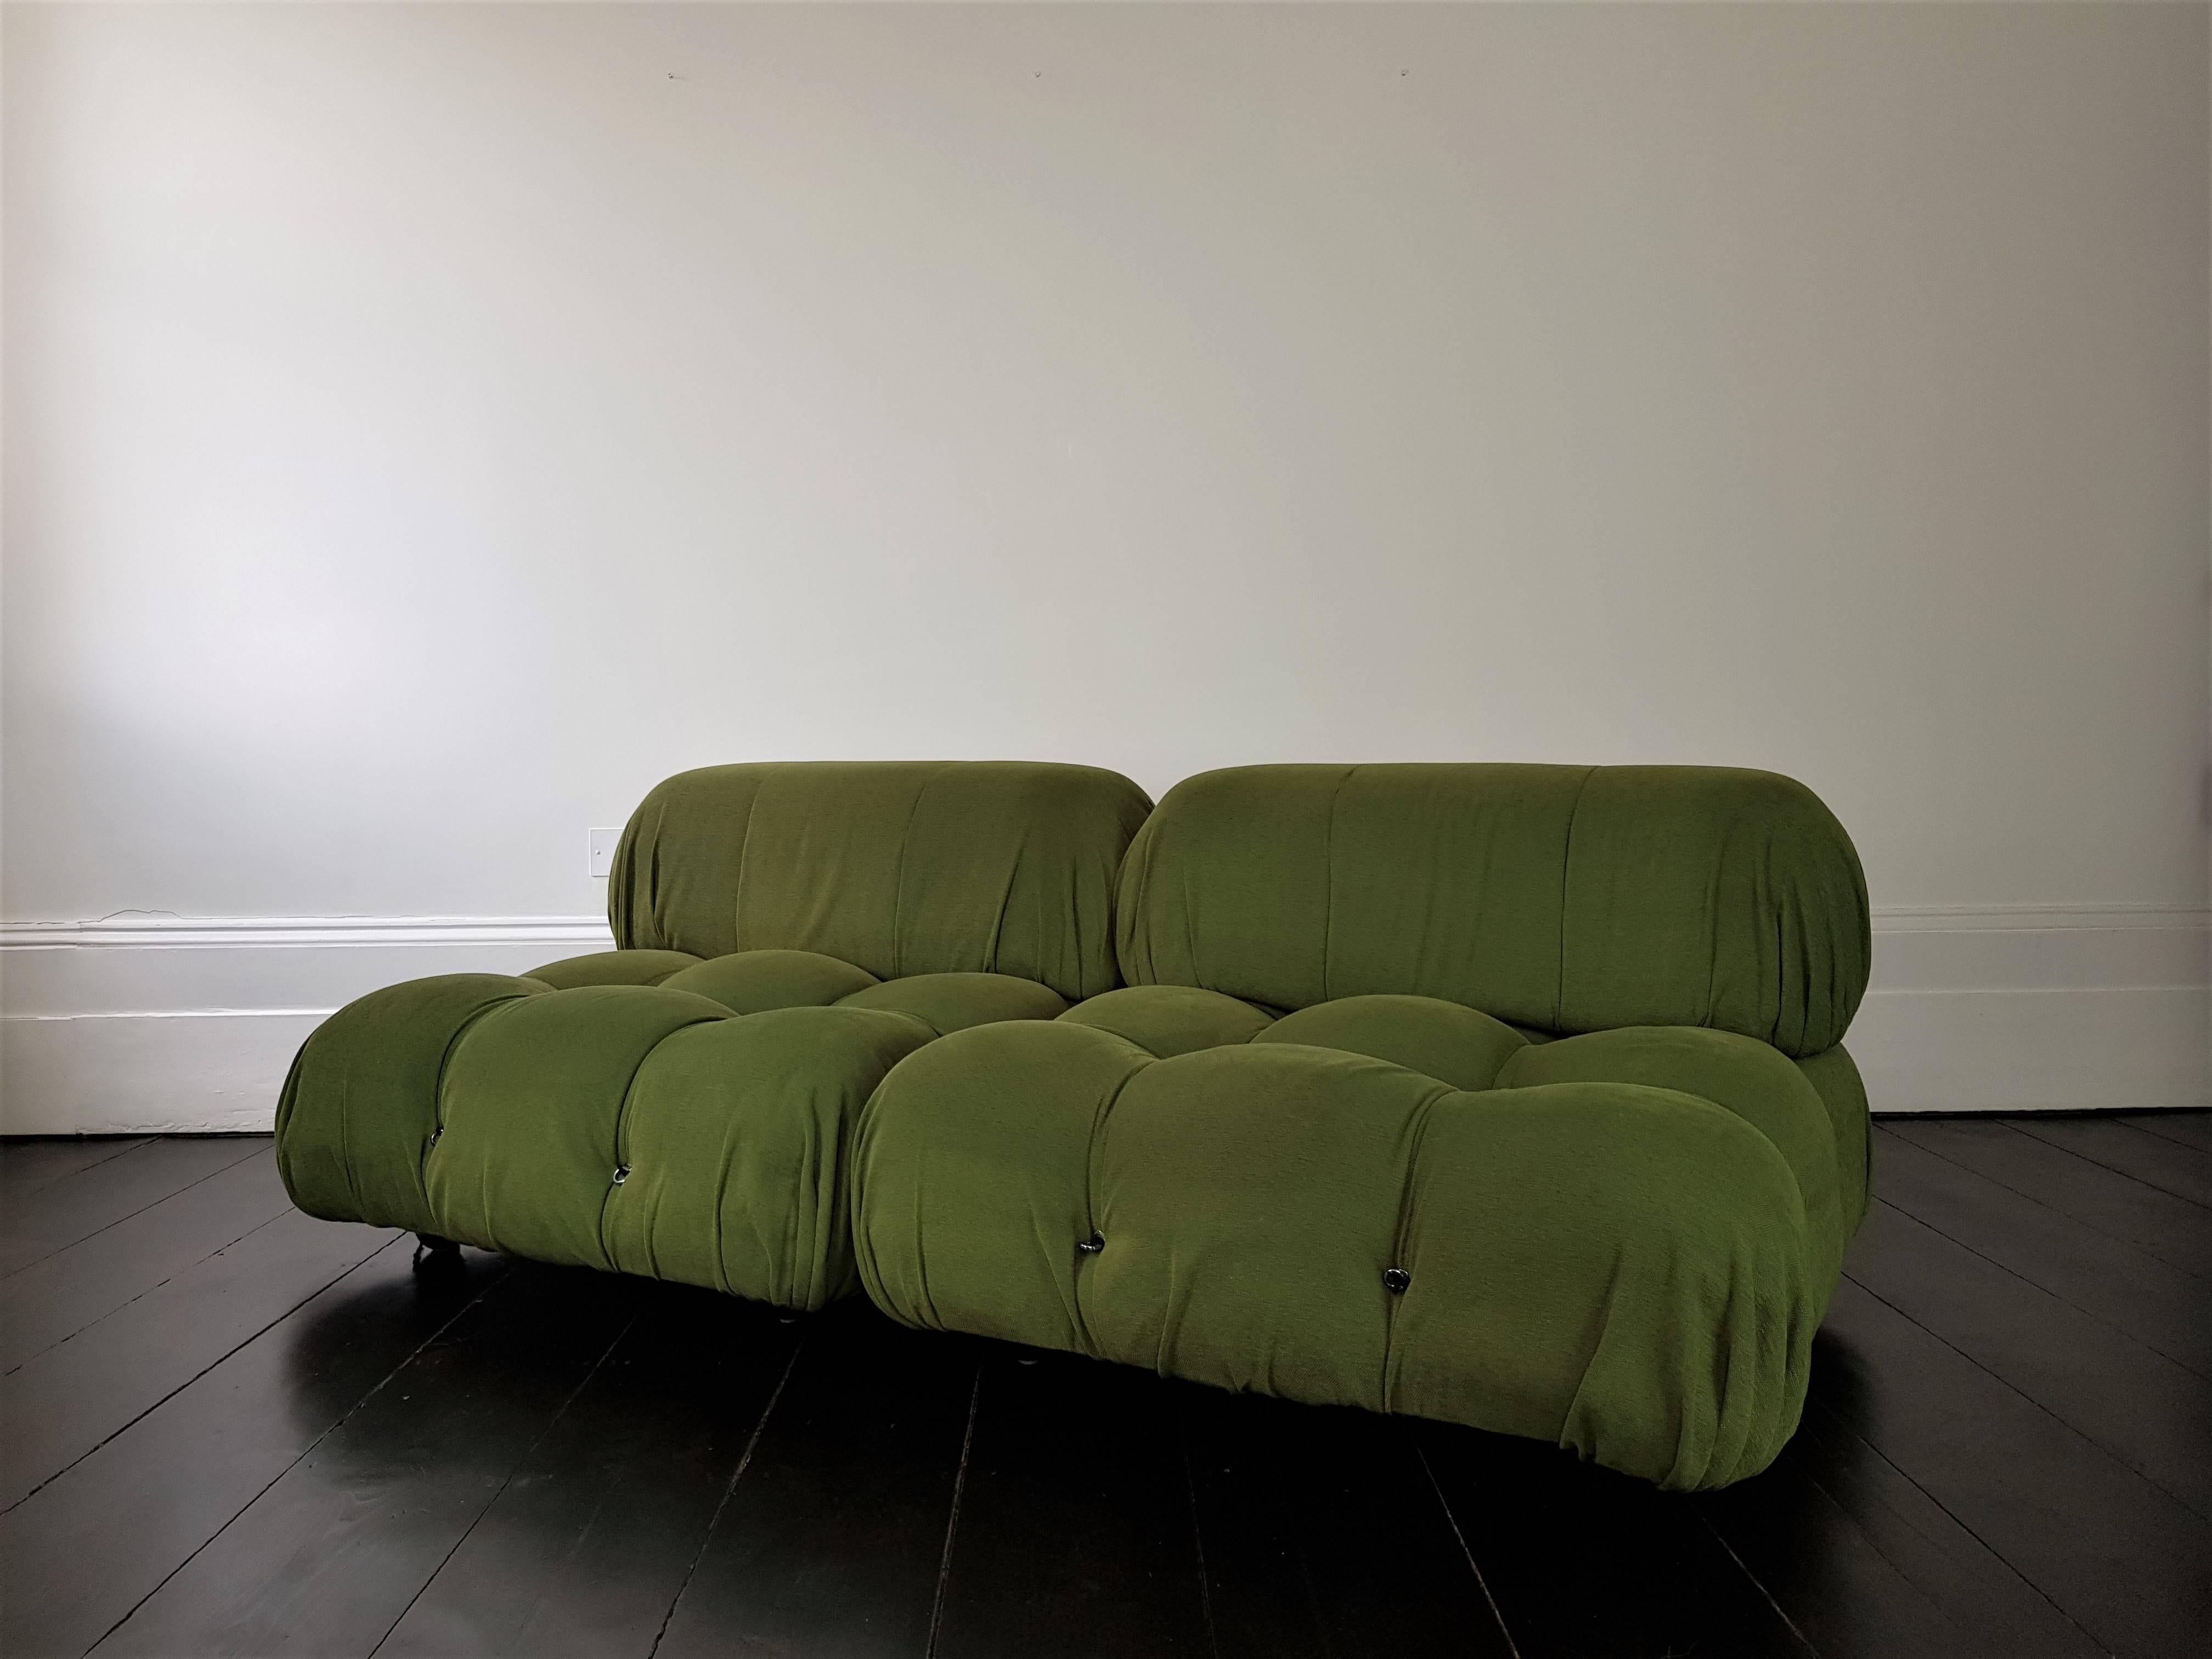 Mario Bellini 'Camaleonda' Modular Sofa with Original Fabric, Designed 1971 In Good Condition In London Road, Baldock, Hertfordshire